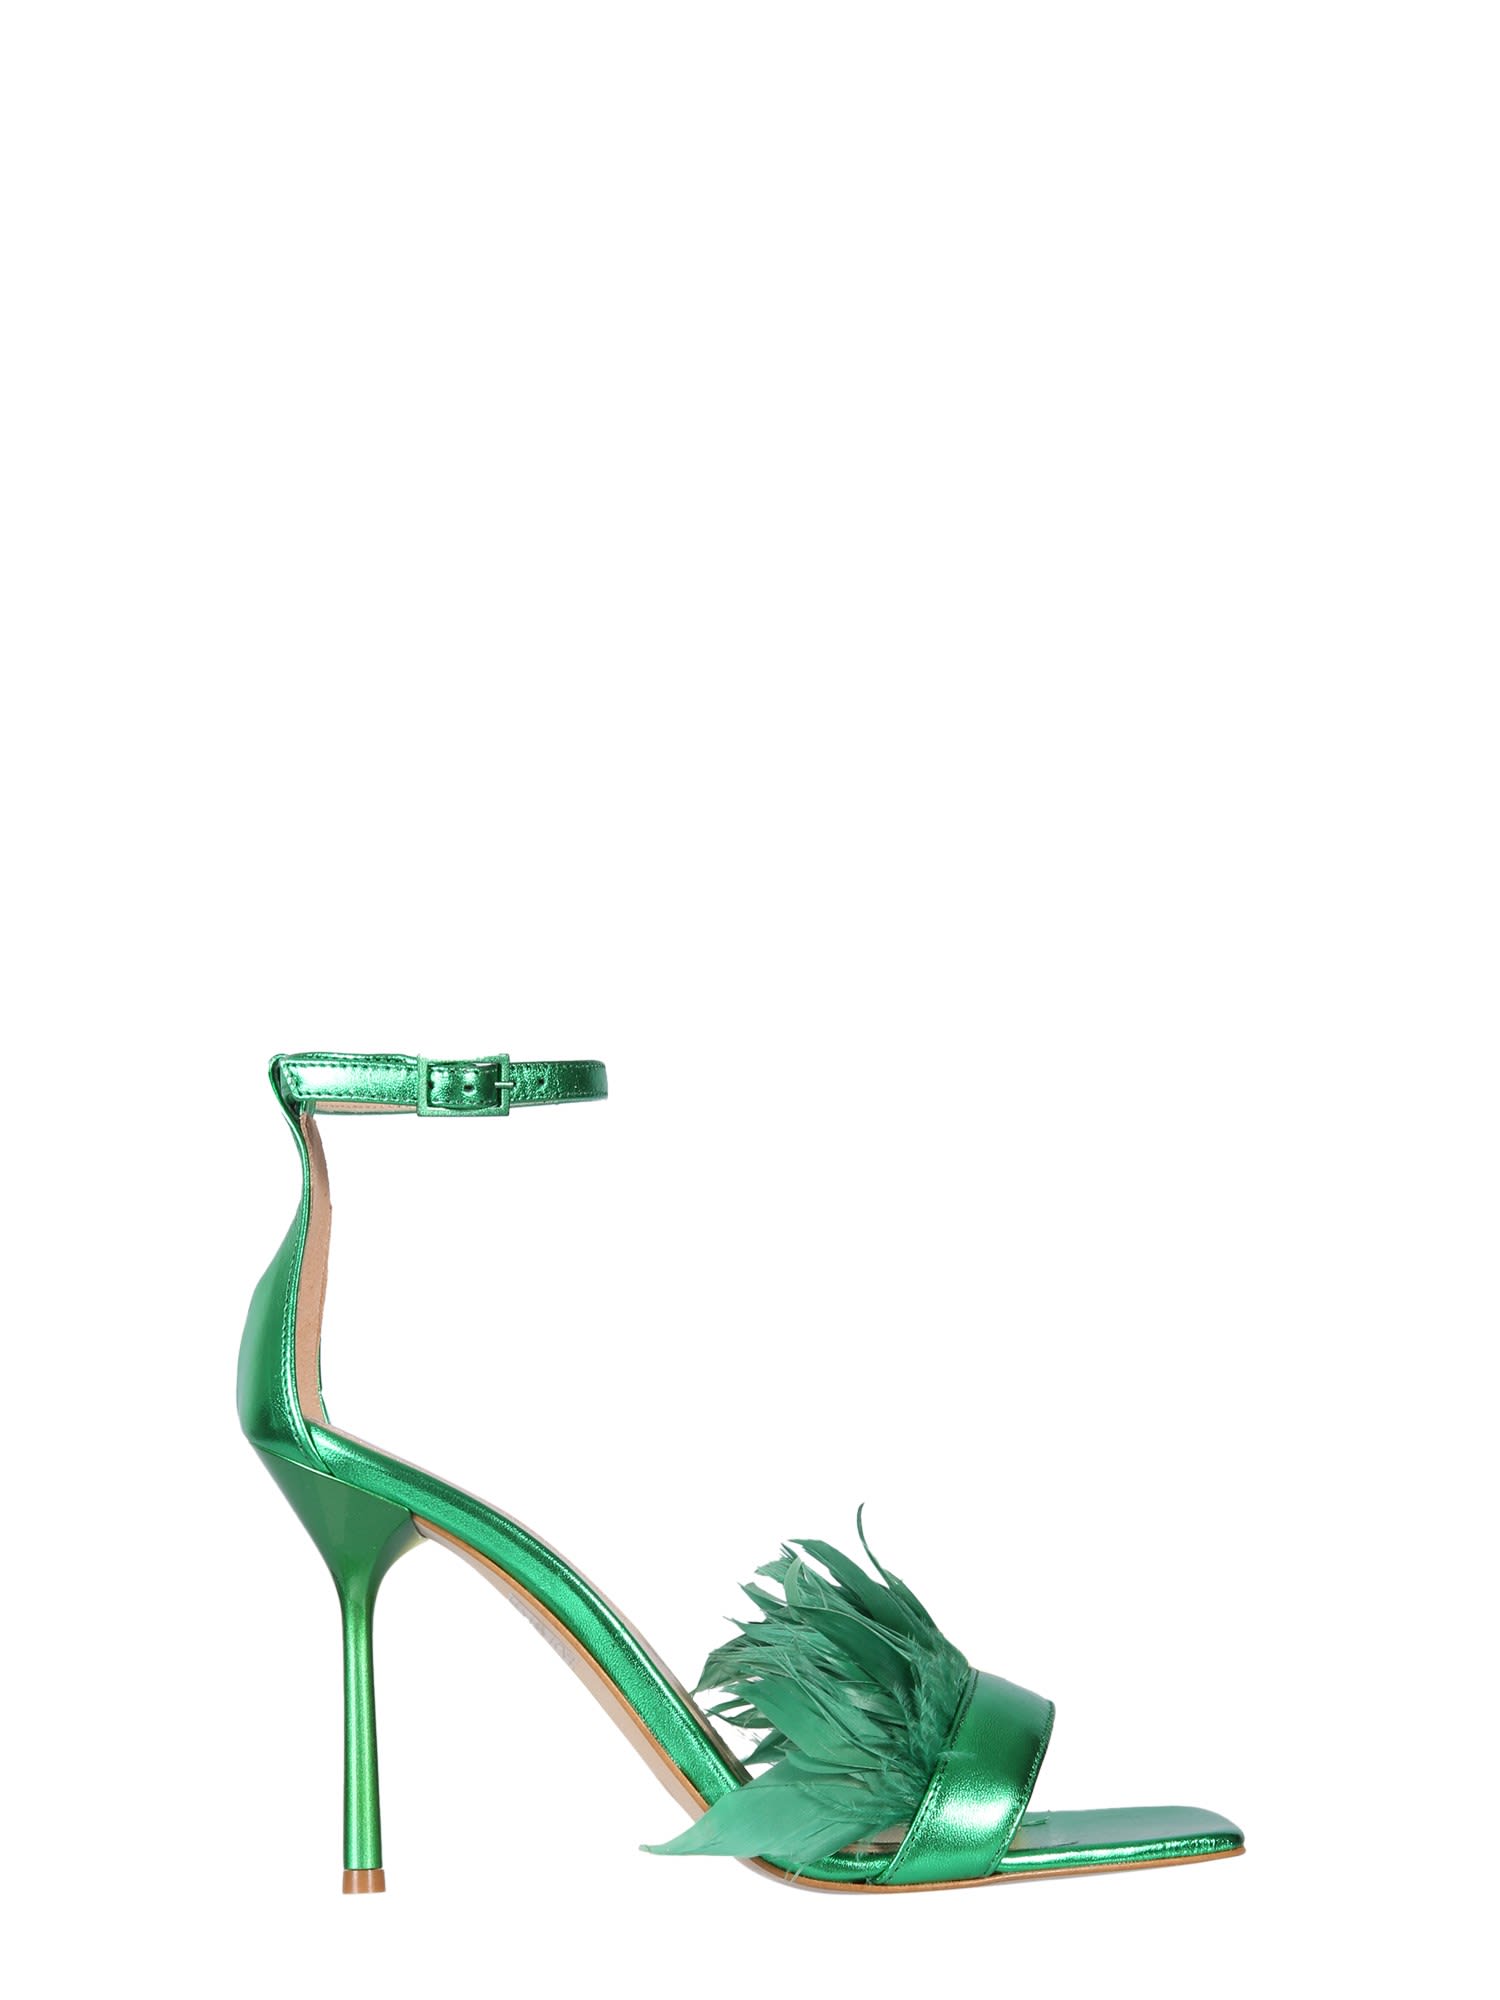 Liu •jo Laminated Nappa Feathers - Camelia In Smeraldo